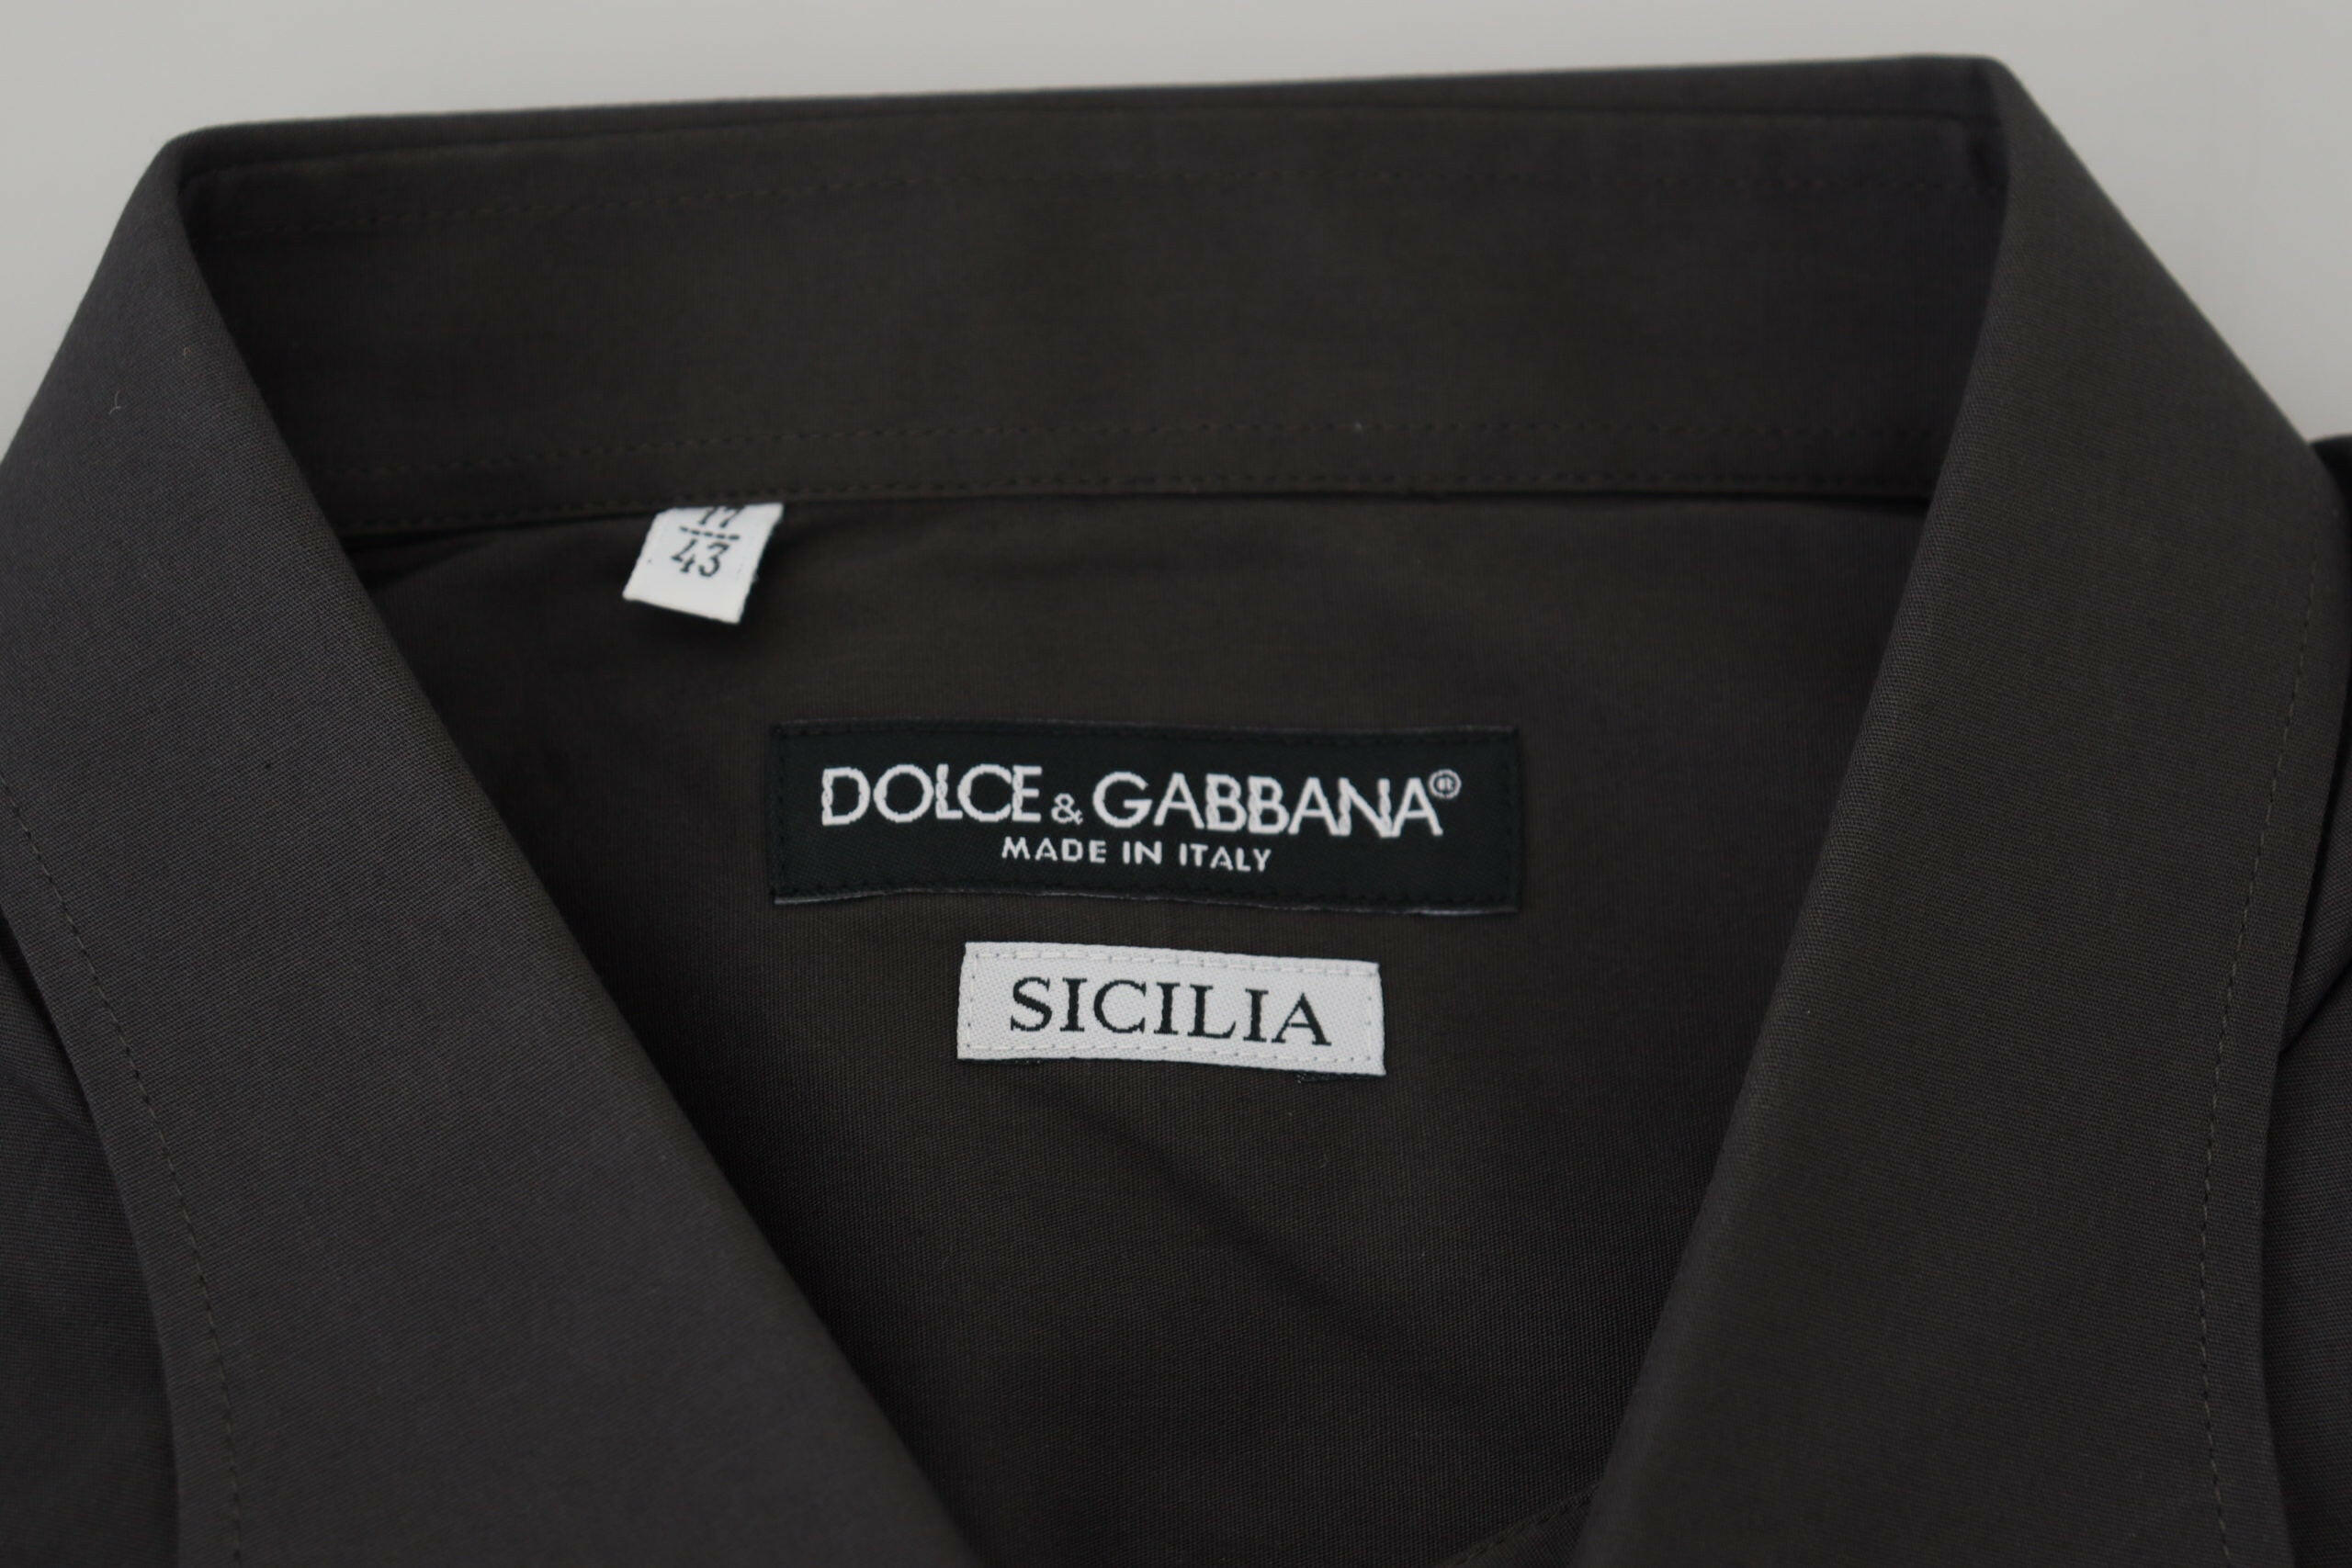 Dolce & Gabbana Gray SICILIA Slim Fit Stretch Dress Shirt - GENUINE AUTHENTIC BRAND LLC  